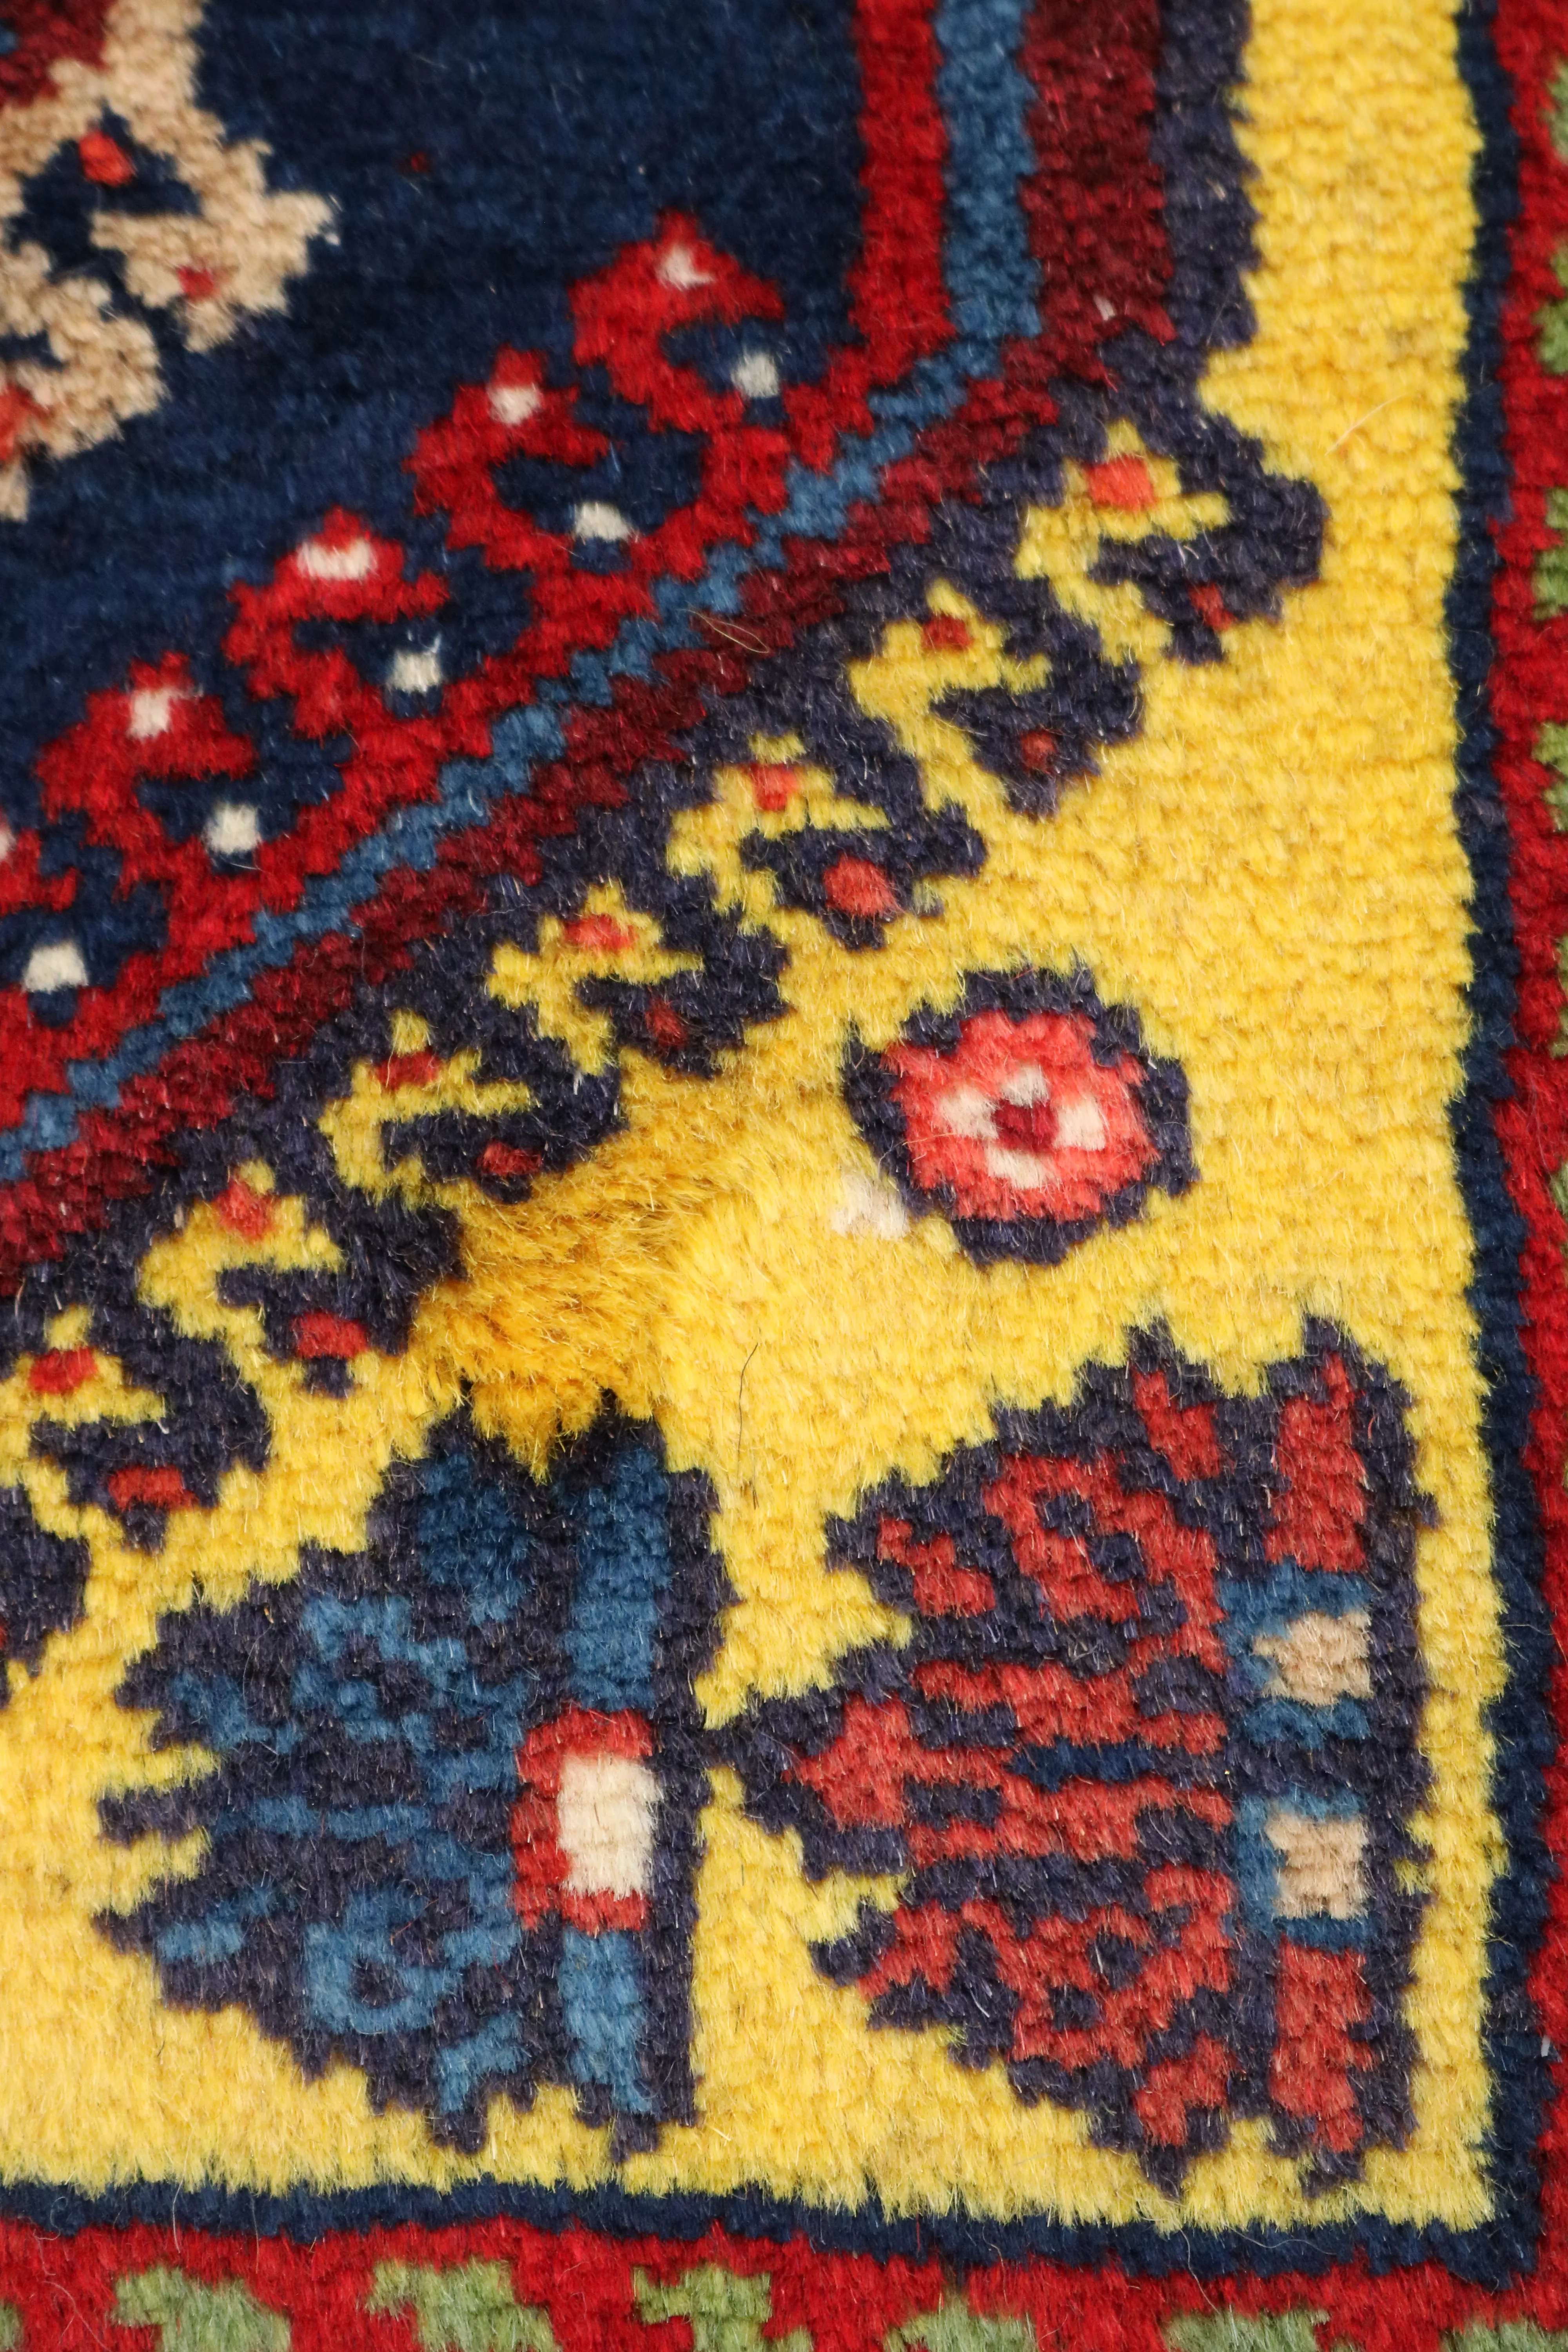 Shahreza Isfahan Handwoven Yalameh Carpet